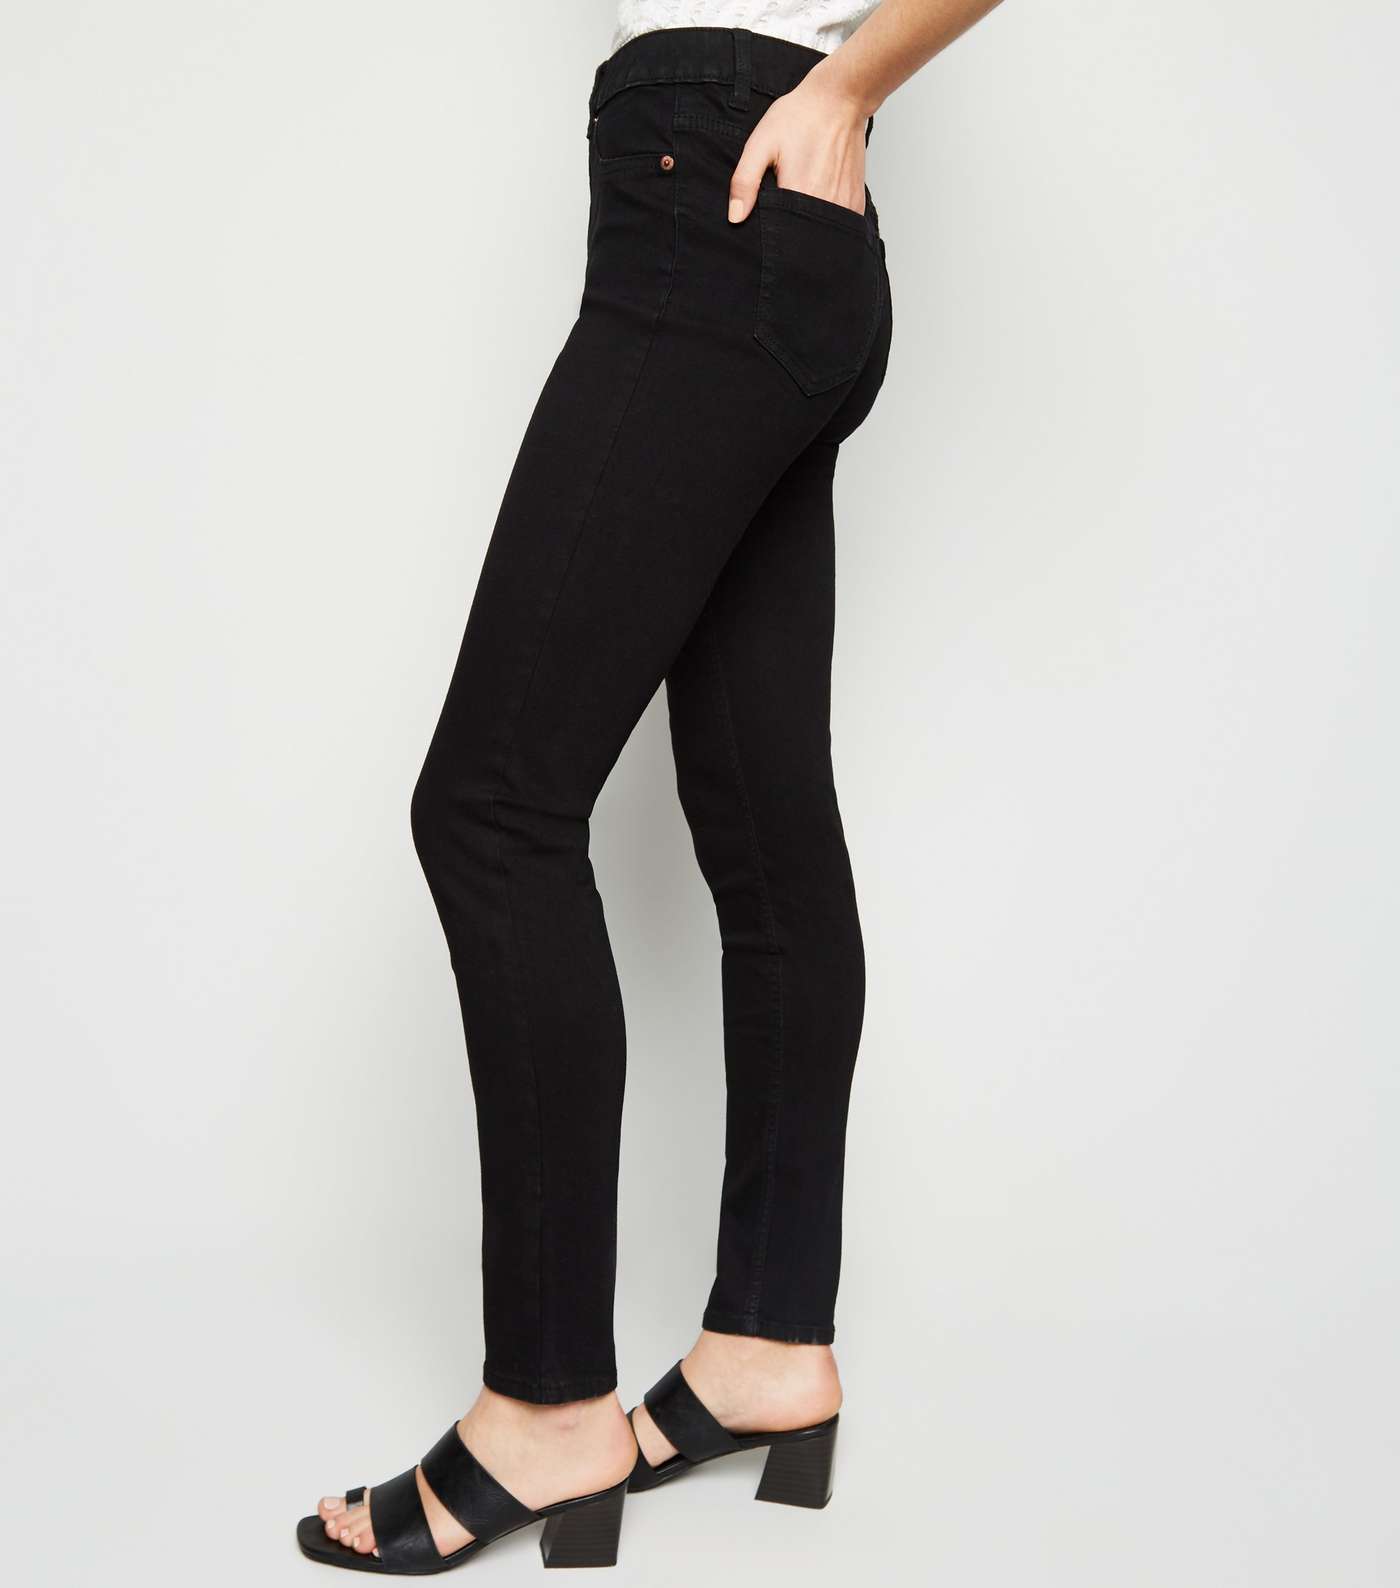 Black Jenna Skinny Jeans Image 5